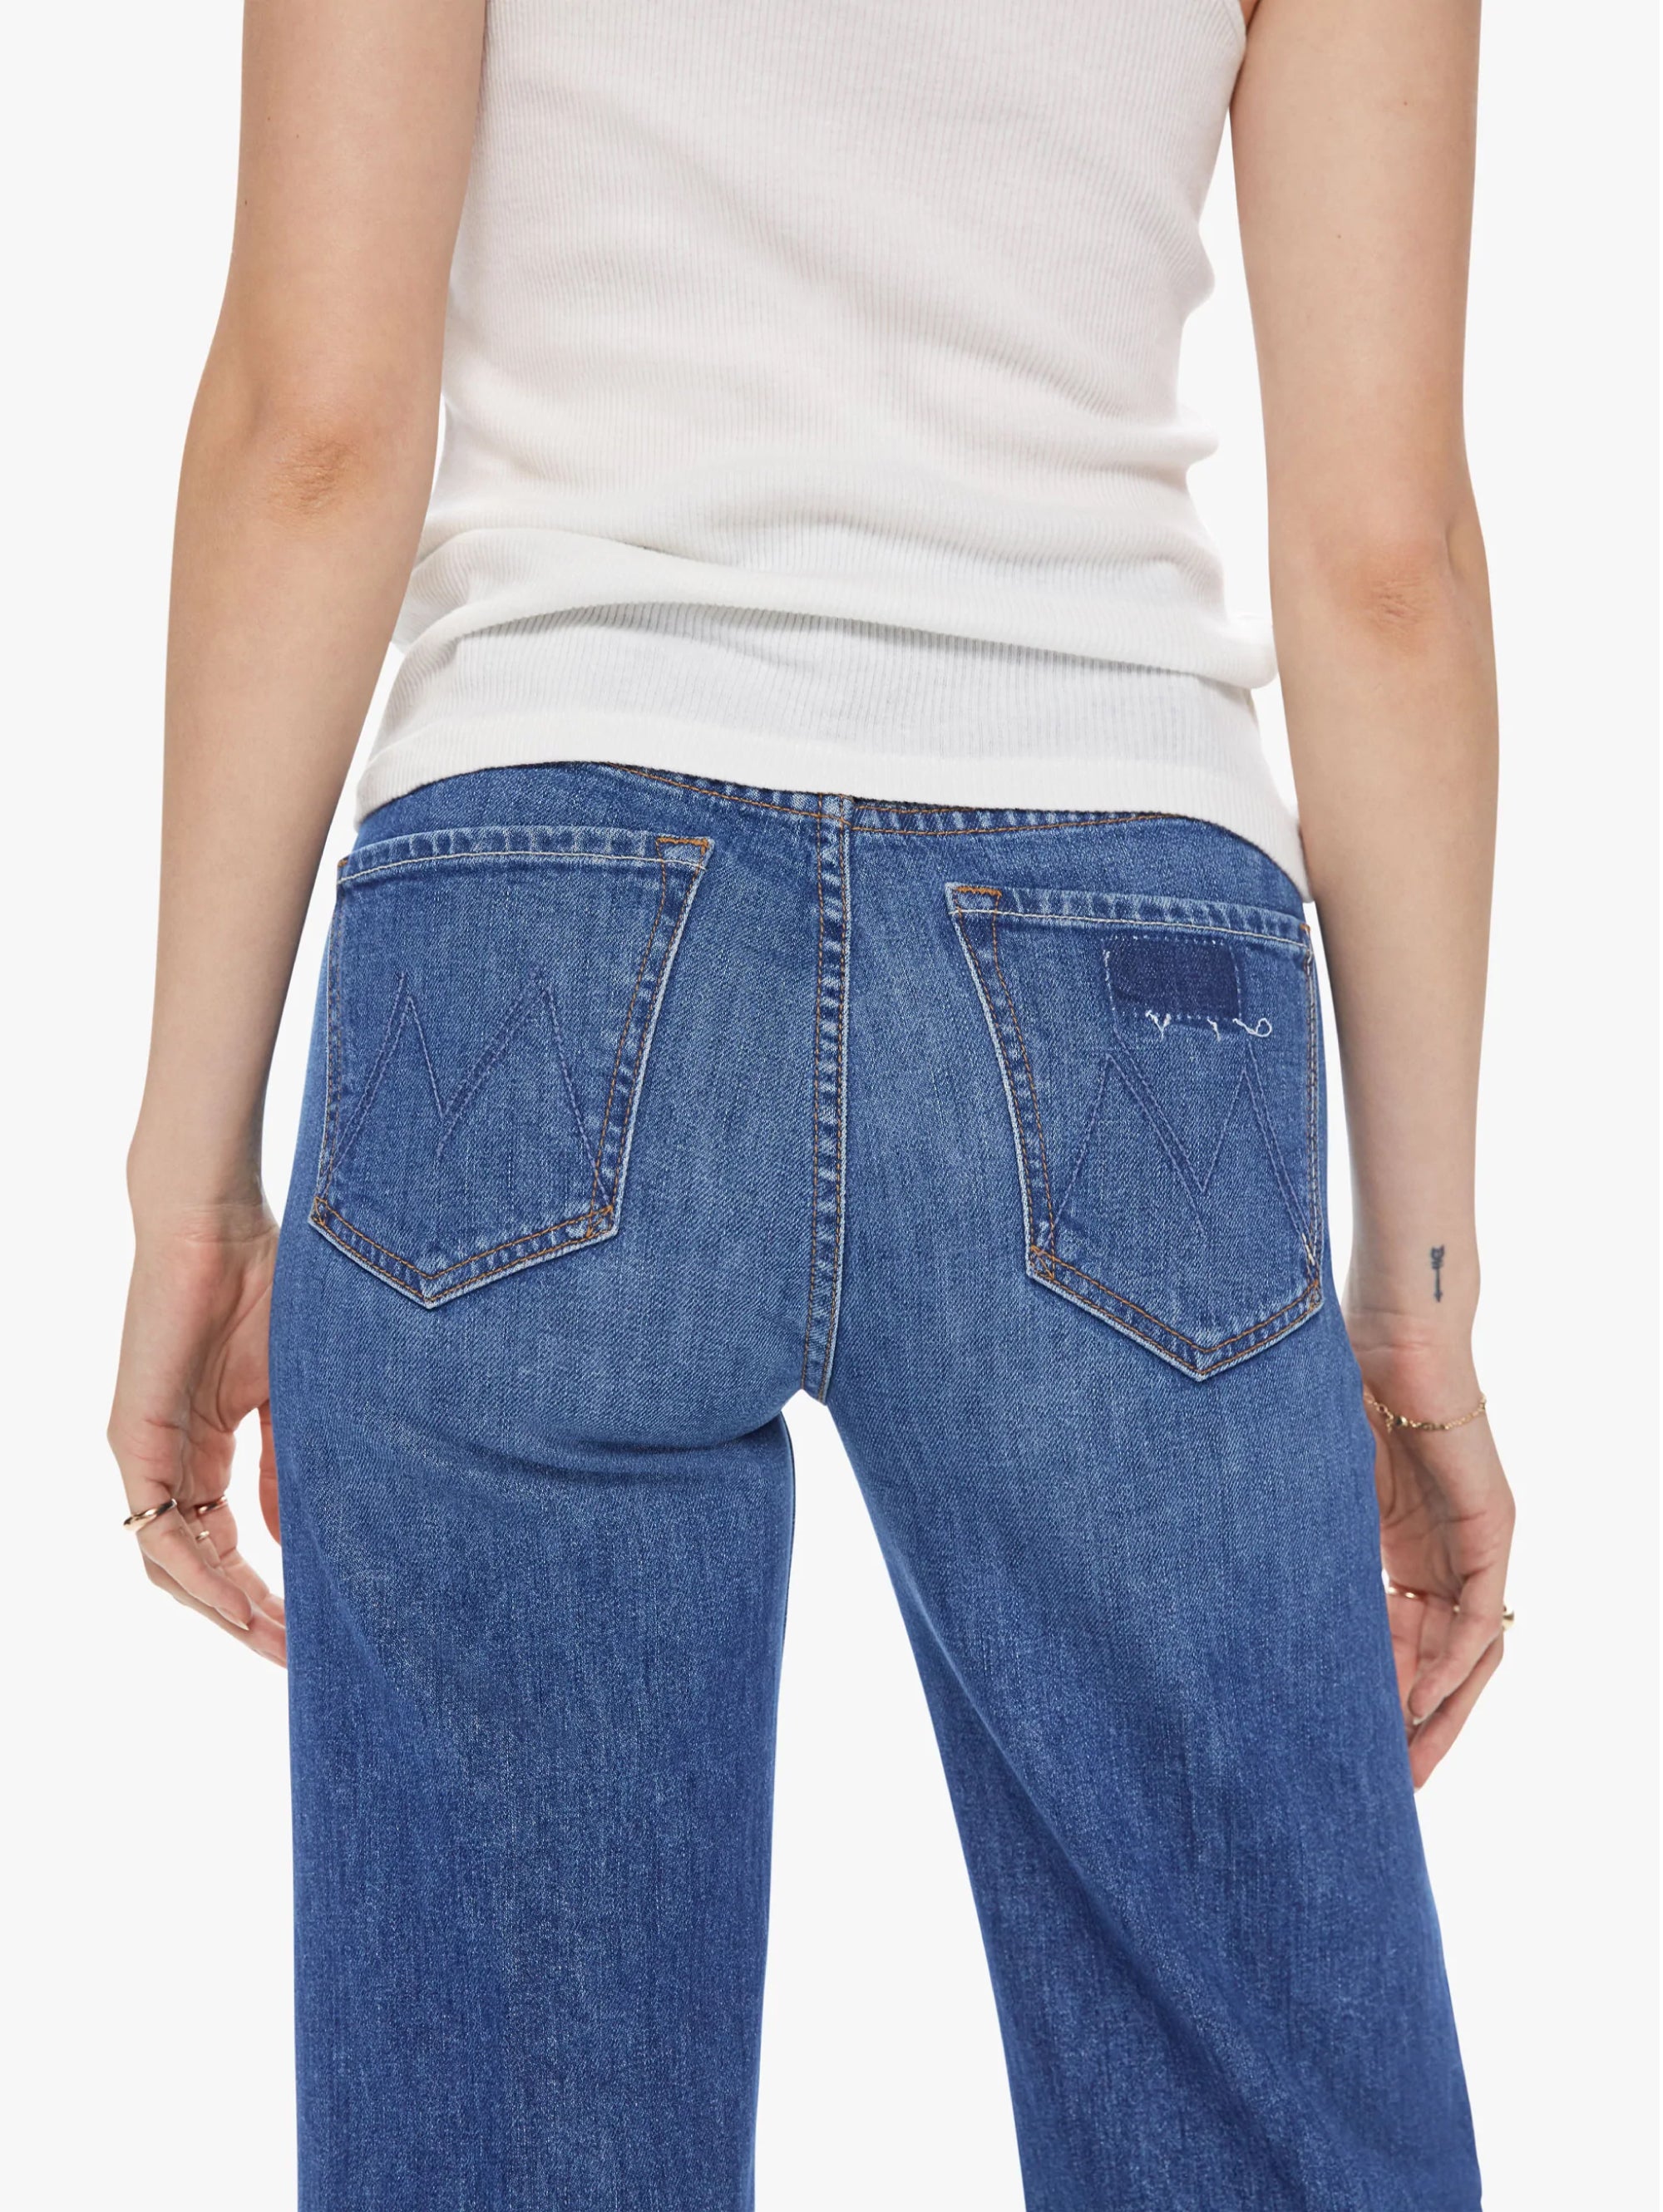 MOTHER-Jeans a Zampa Vita Alta Blu-TRYME Shop